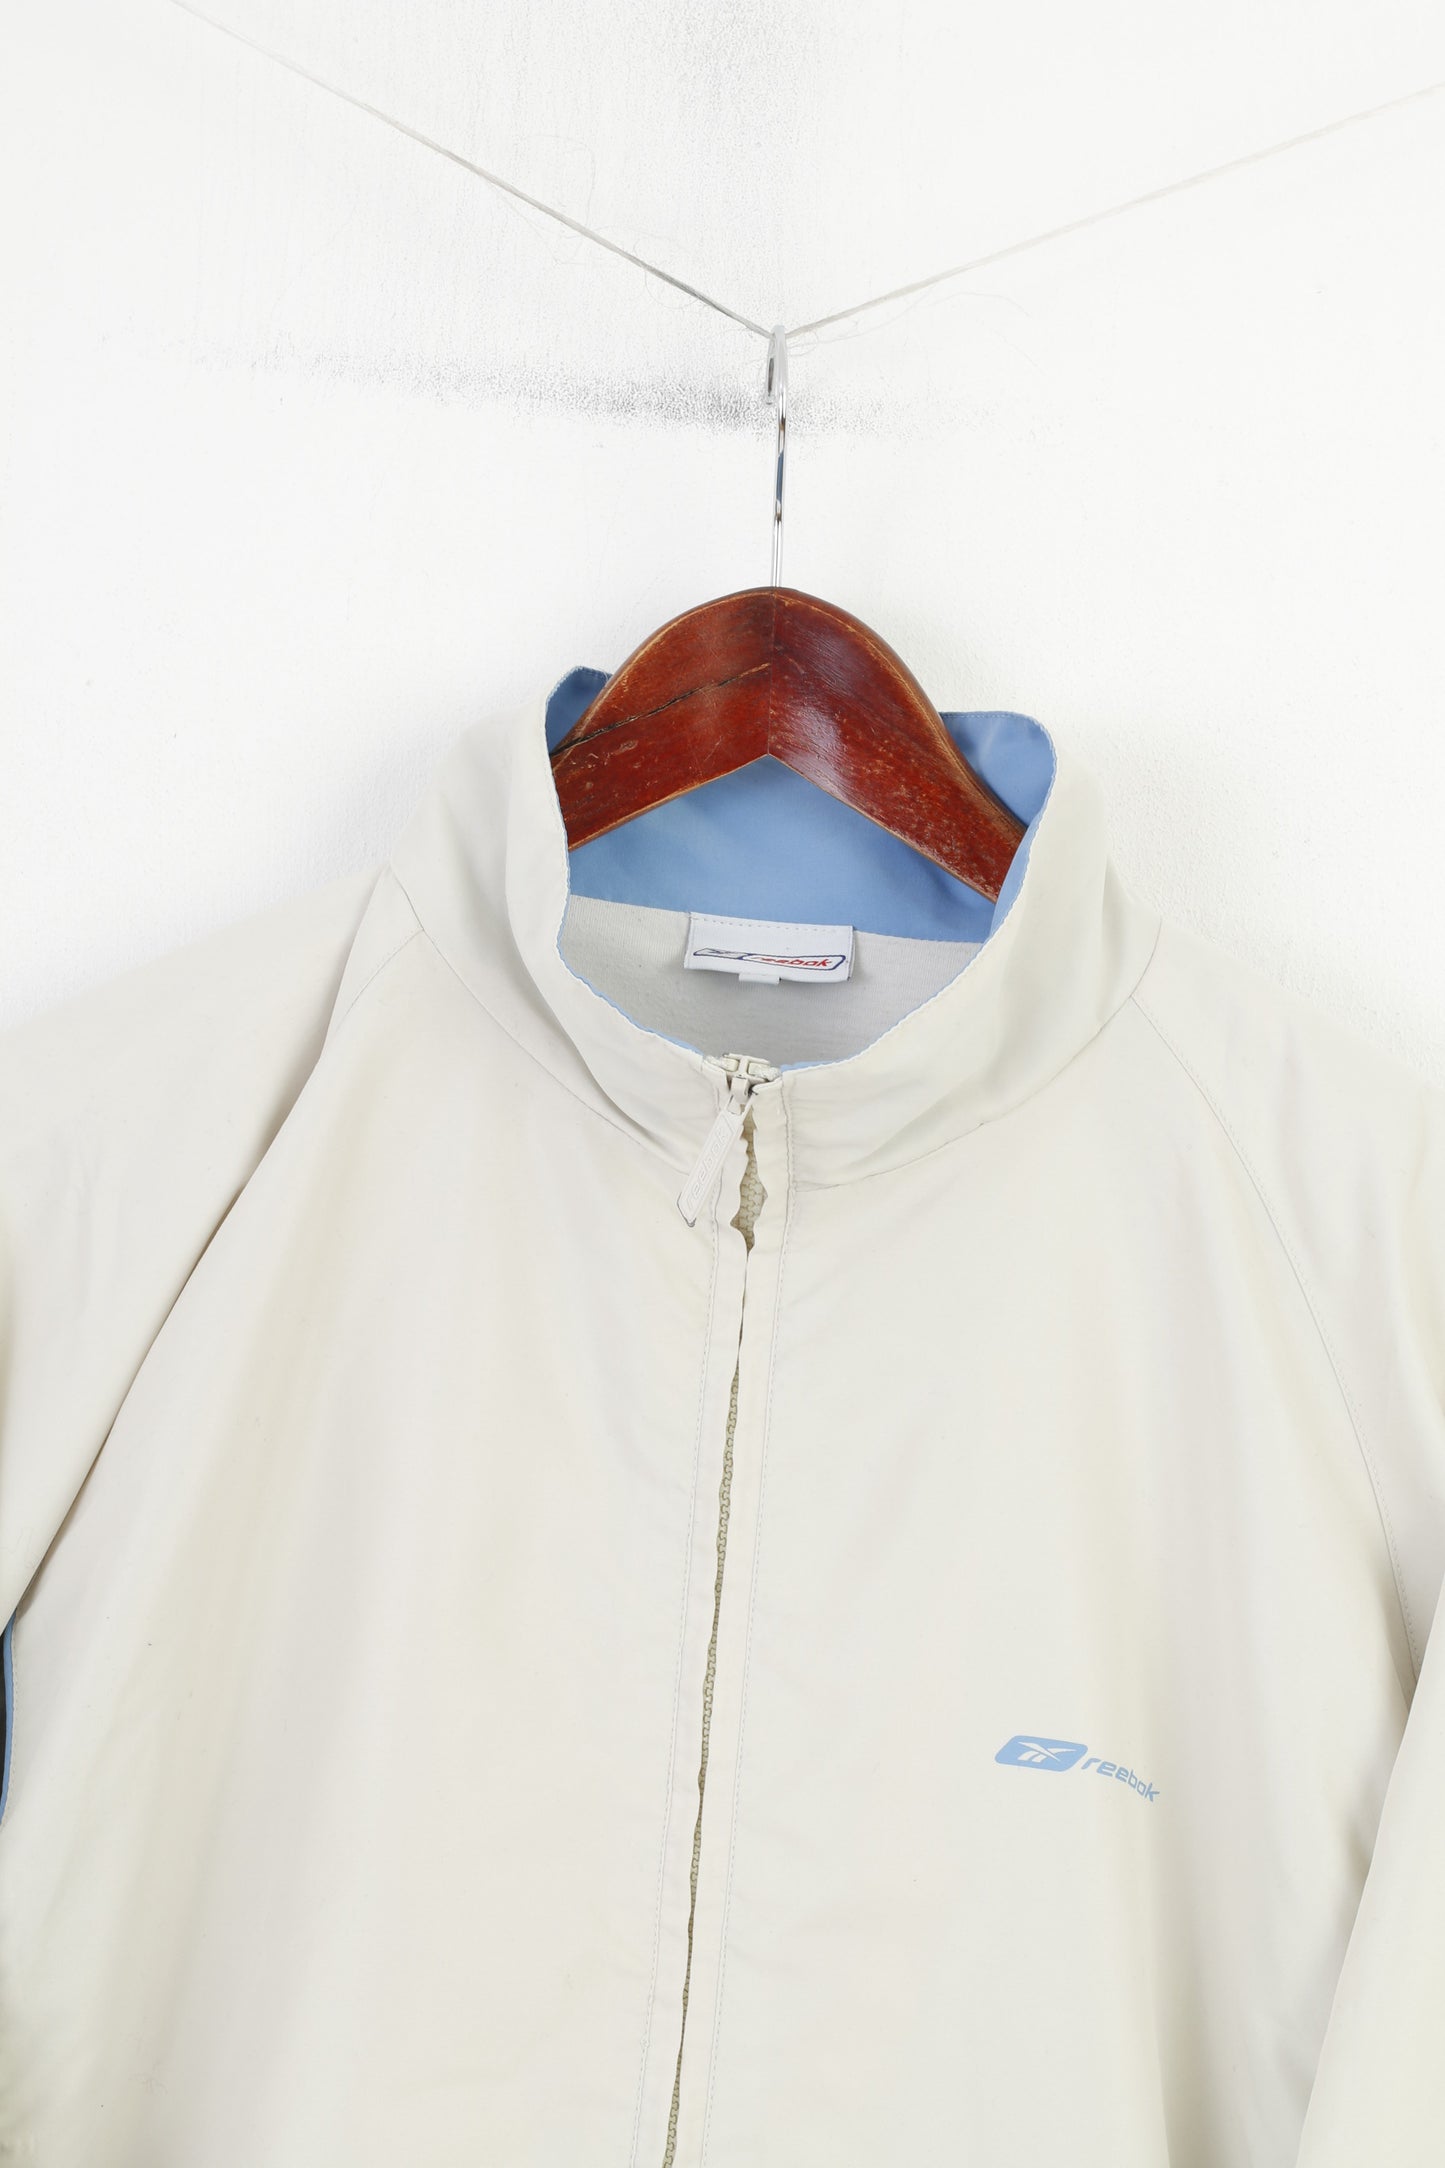 Reebok Men XL Jacket Full Zipper Cream Vintage Pockets 90s Outwear Top